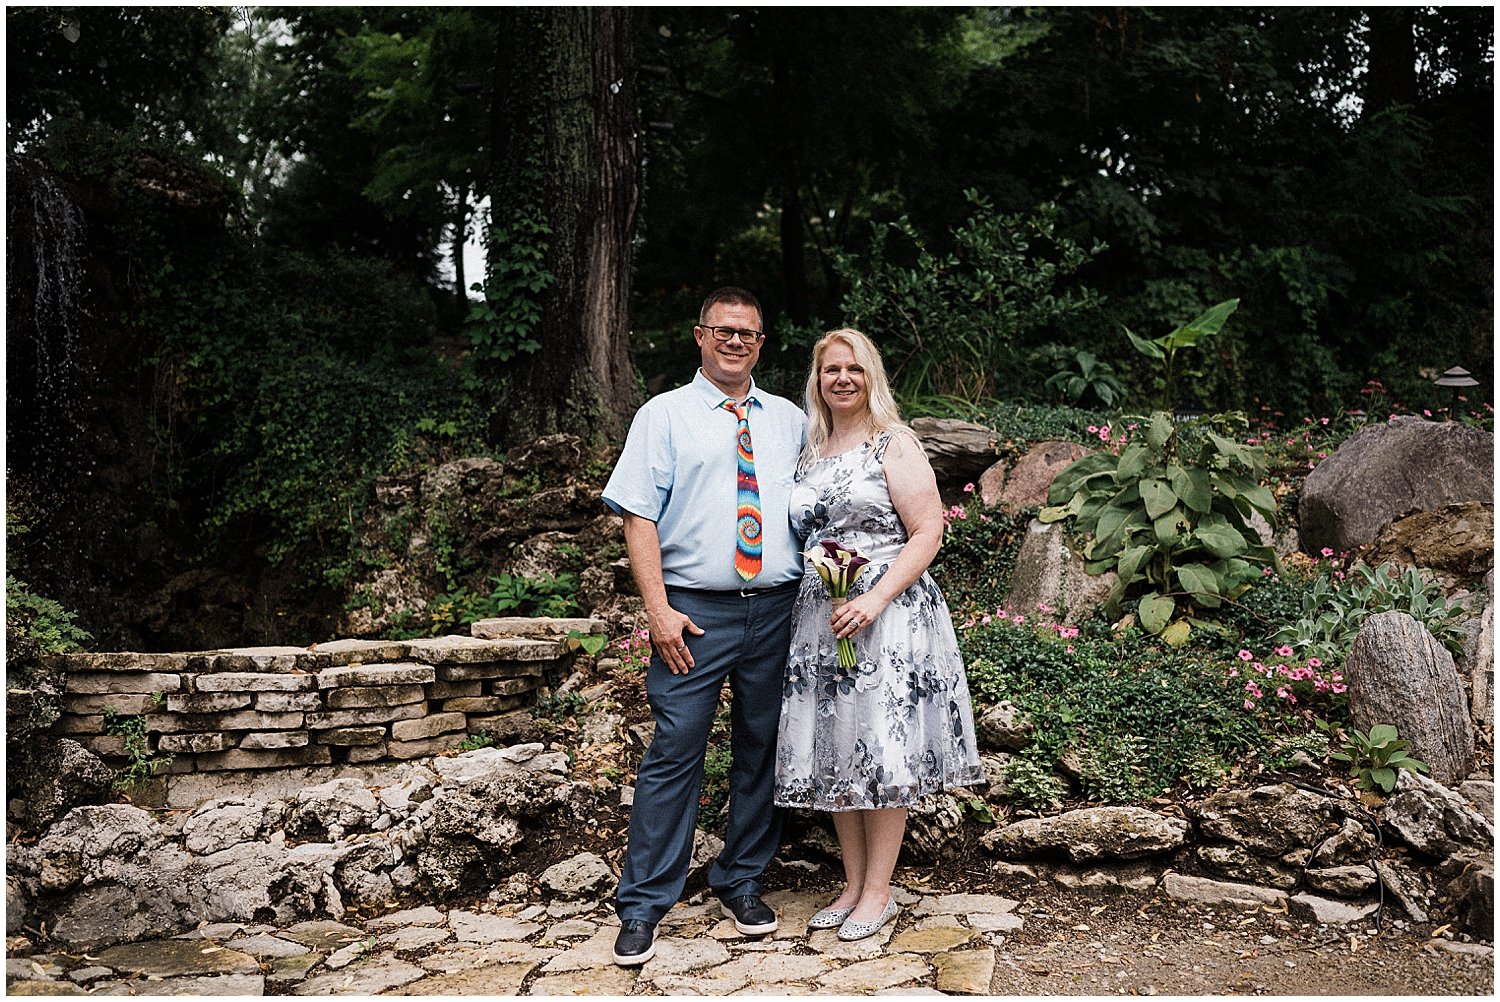 Dayton Grotto Gardens Wedding | Dayton VA Center